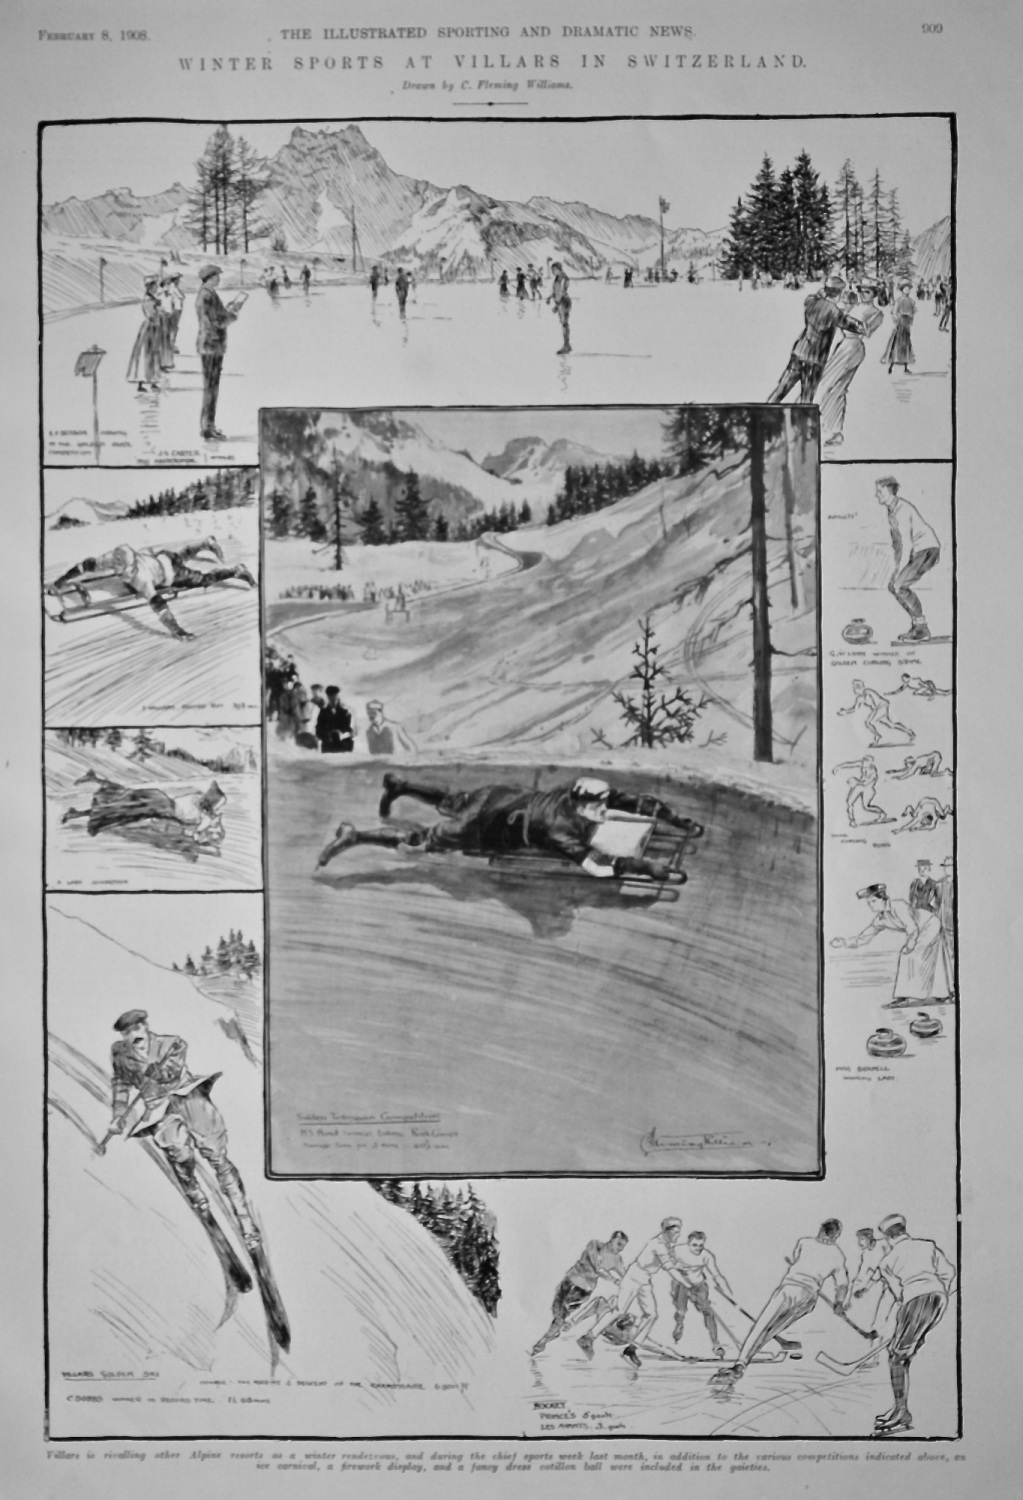 Winter Sports in Villars in Switzerland.  1908.